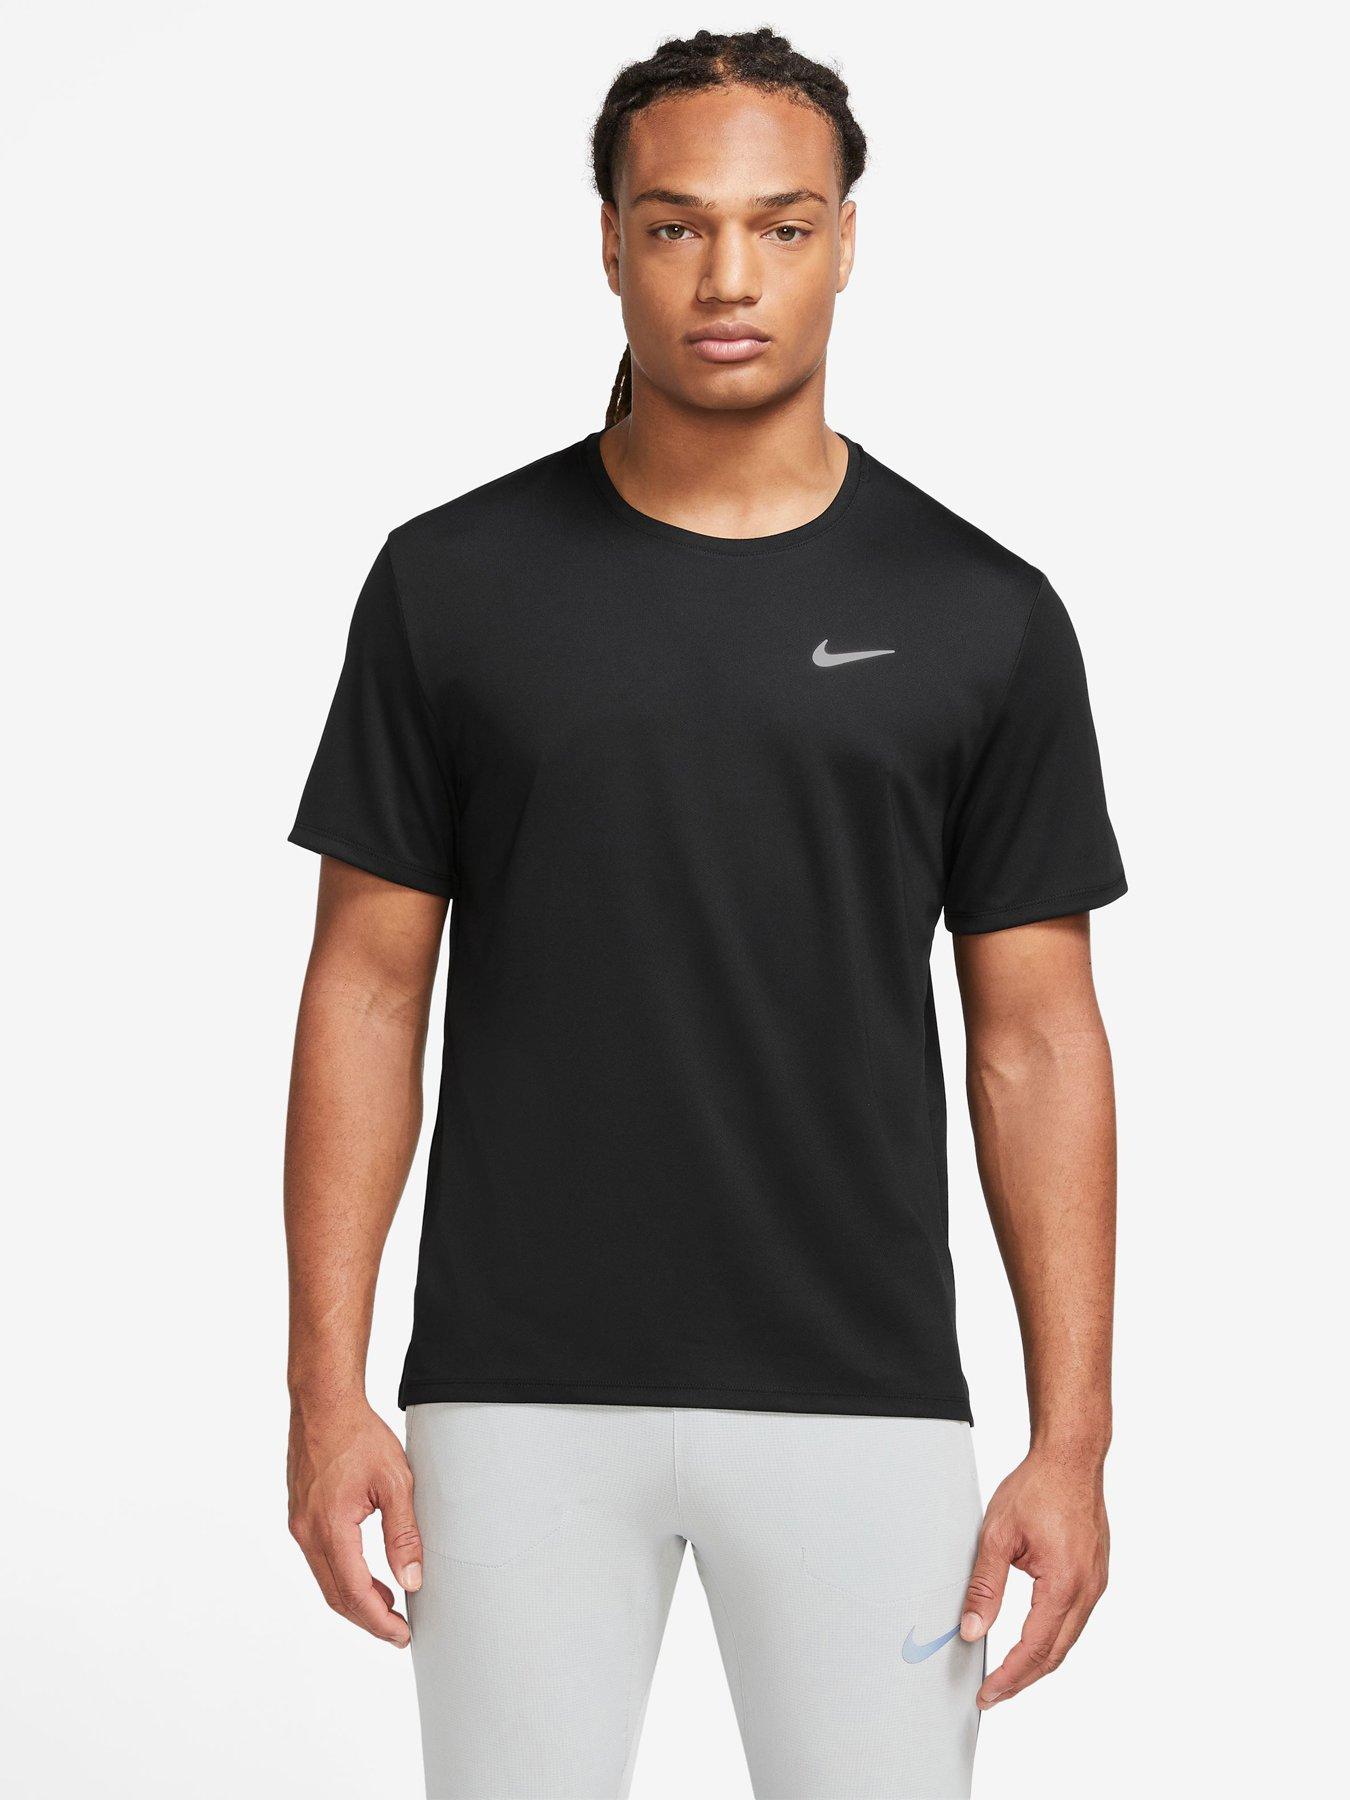 Loose Fit T-shirt - Black/Fortnite - Men